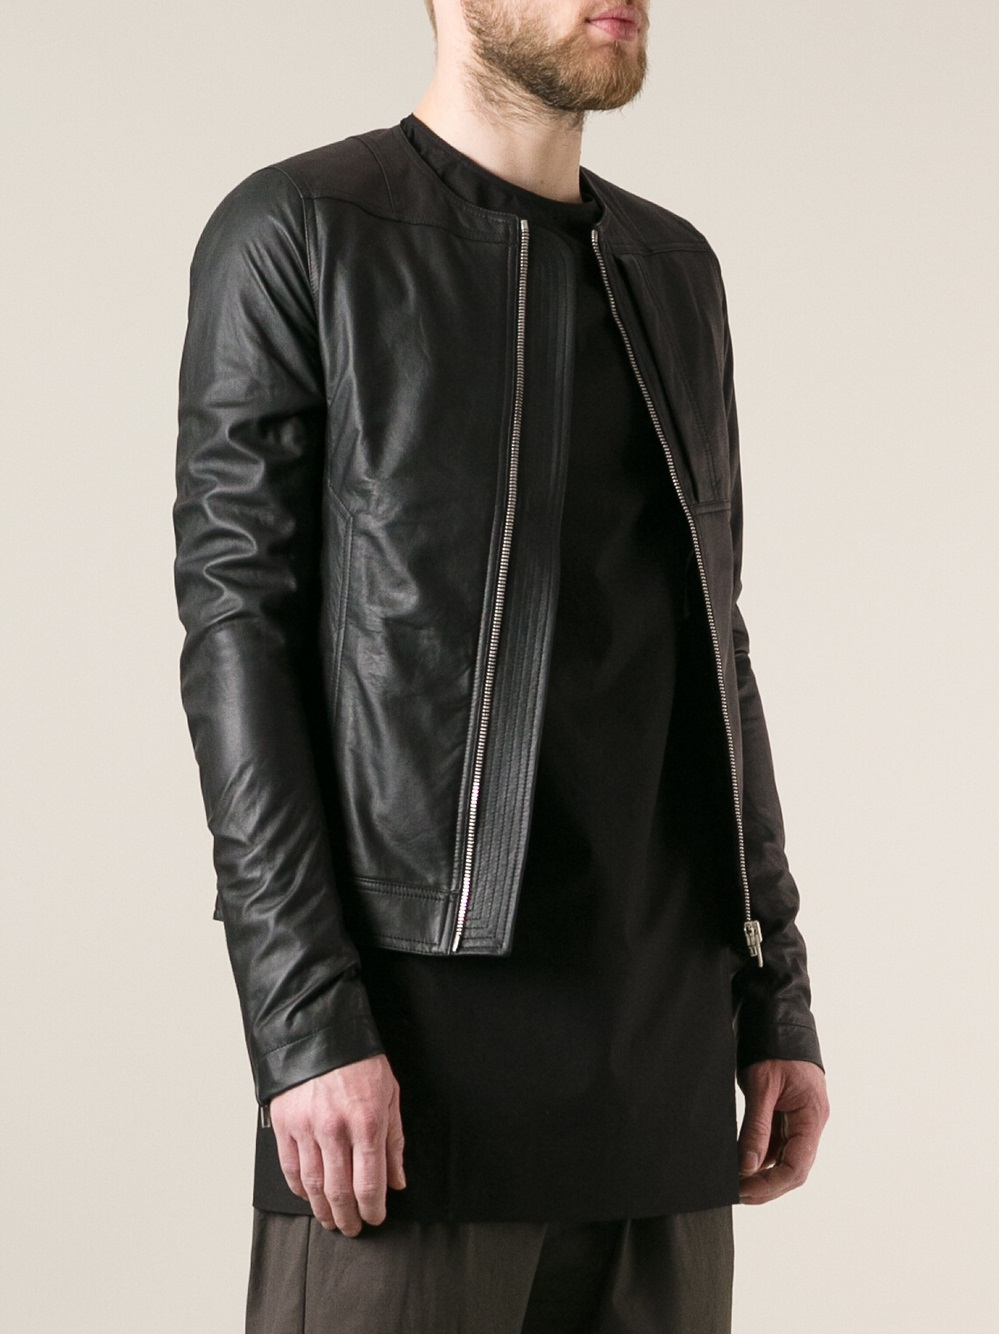 Lyst - Rick Owens Leather Jacket in Black for Men